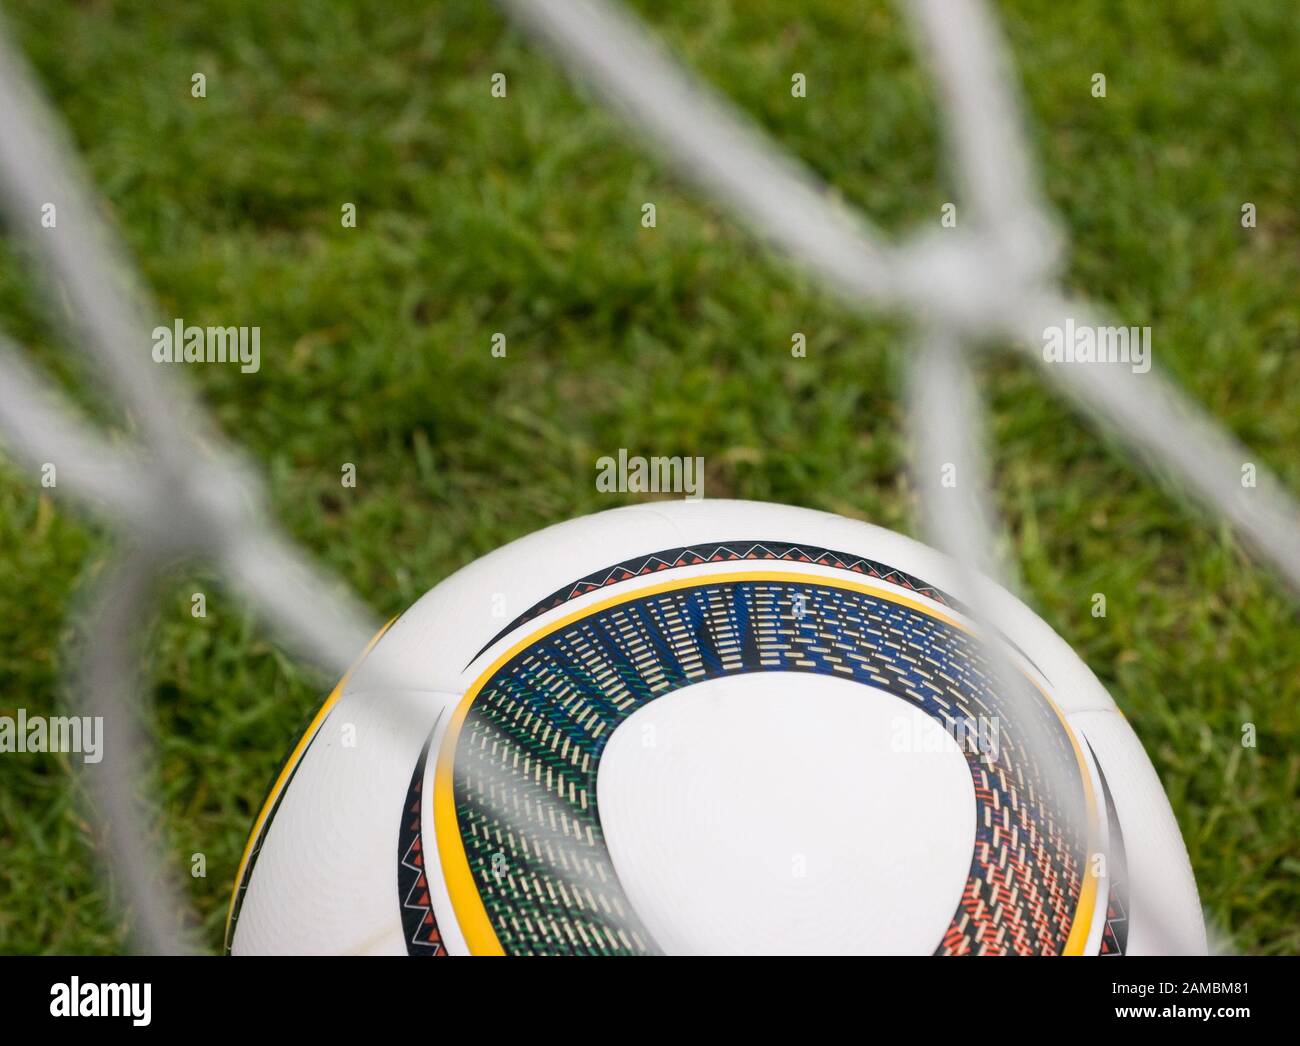 Jabulani Soccer Ball Stock Photo